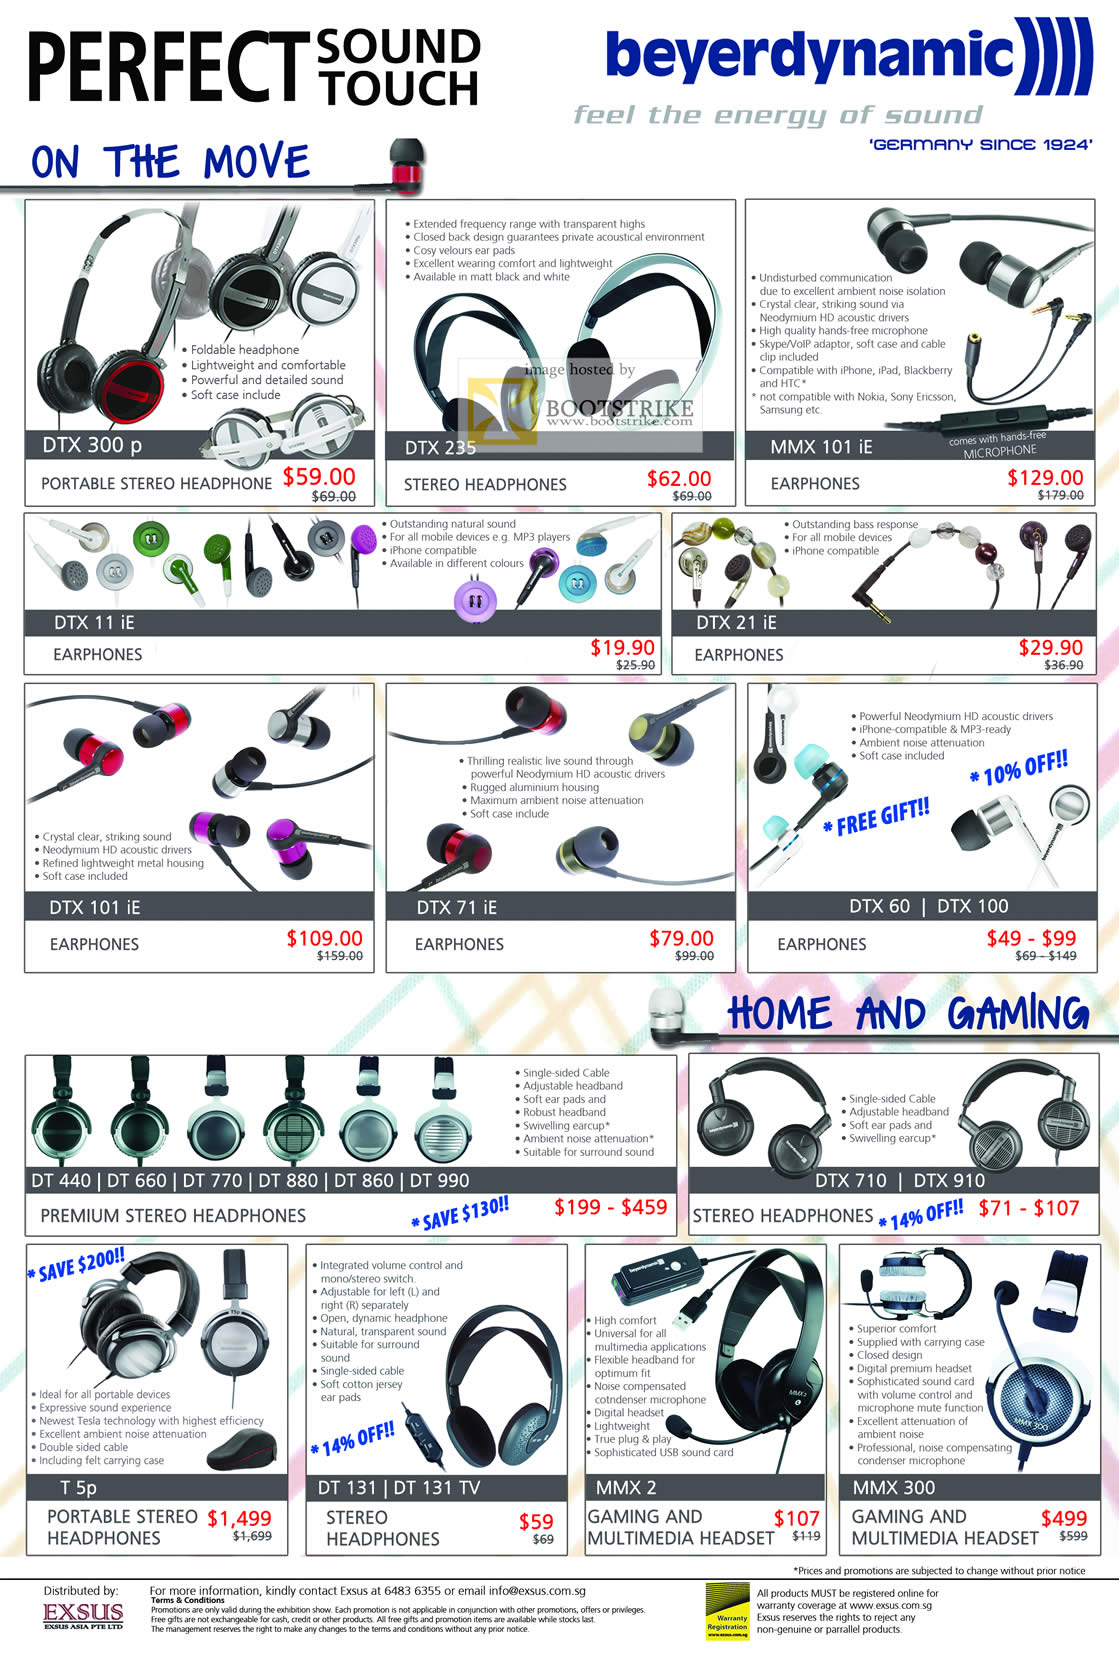 COMEX 2011 price list image brochure of EpiCentre Beyer Dynamic Headphones Earphones DTX 300 P 235 MMX 101 IE 11 IE 21 IE 101 IE 71 IE 60 100 T 5p 131 TV MMX 2 300